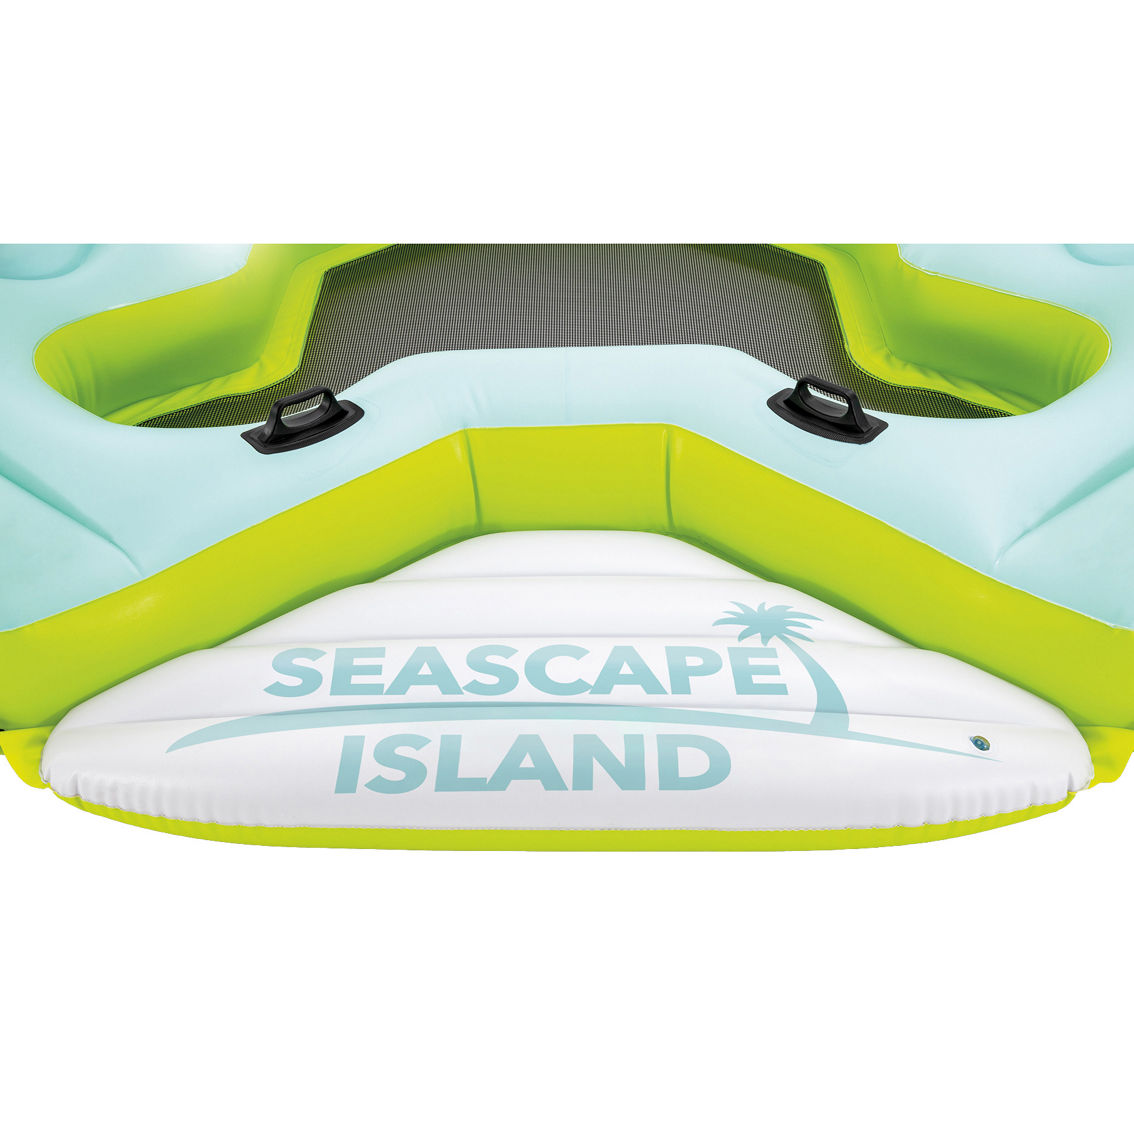 Intex Seascape Island Float - Image 2 of 6